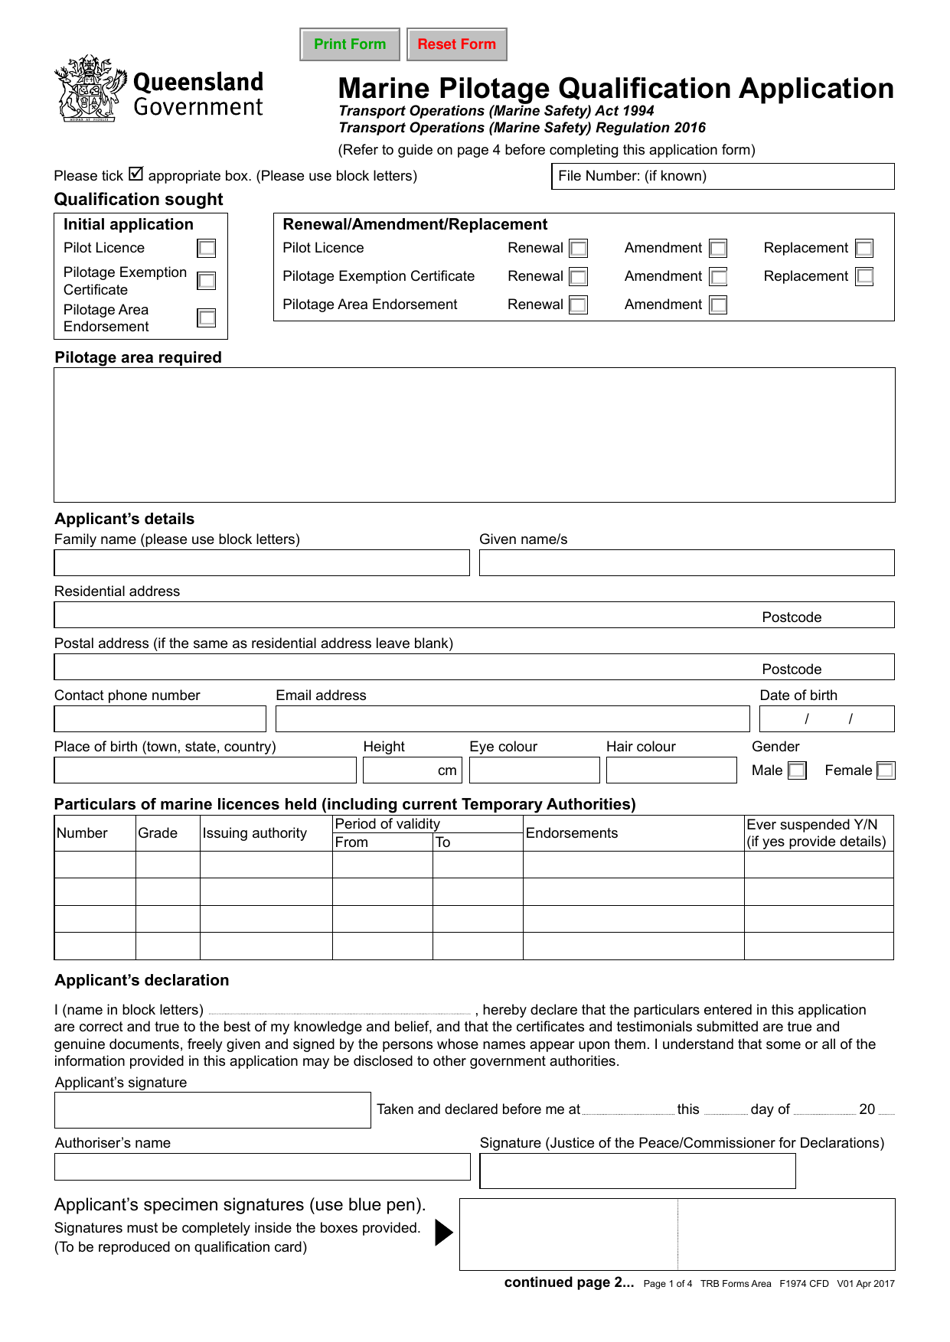 Form F1974 Marine Pilotage Qualification Application - Queensland, Australia, Page 1